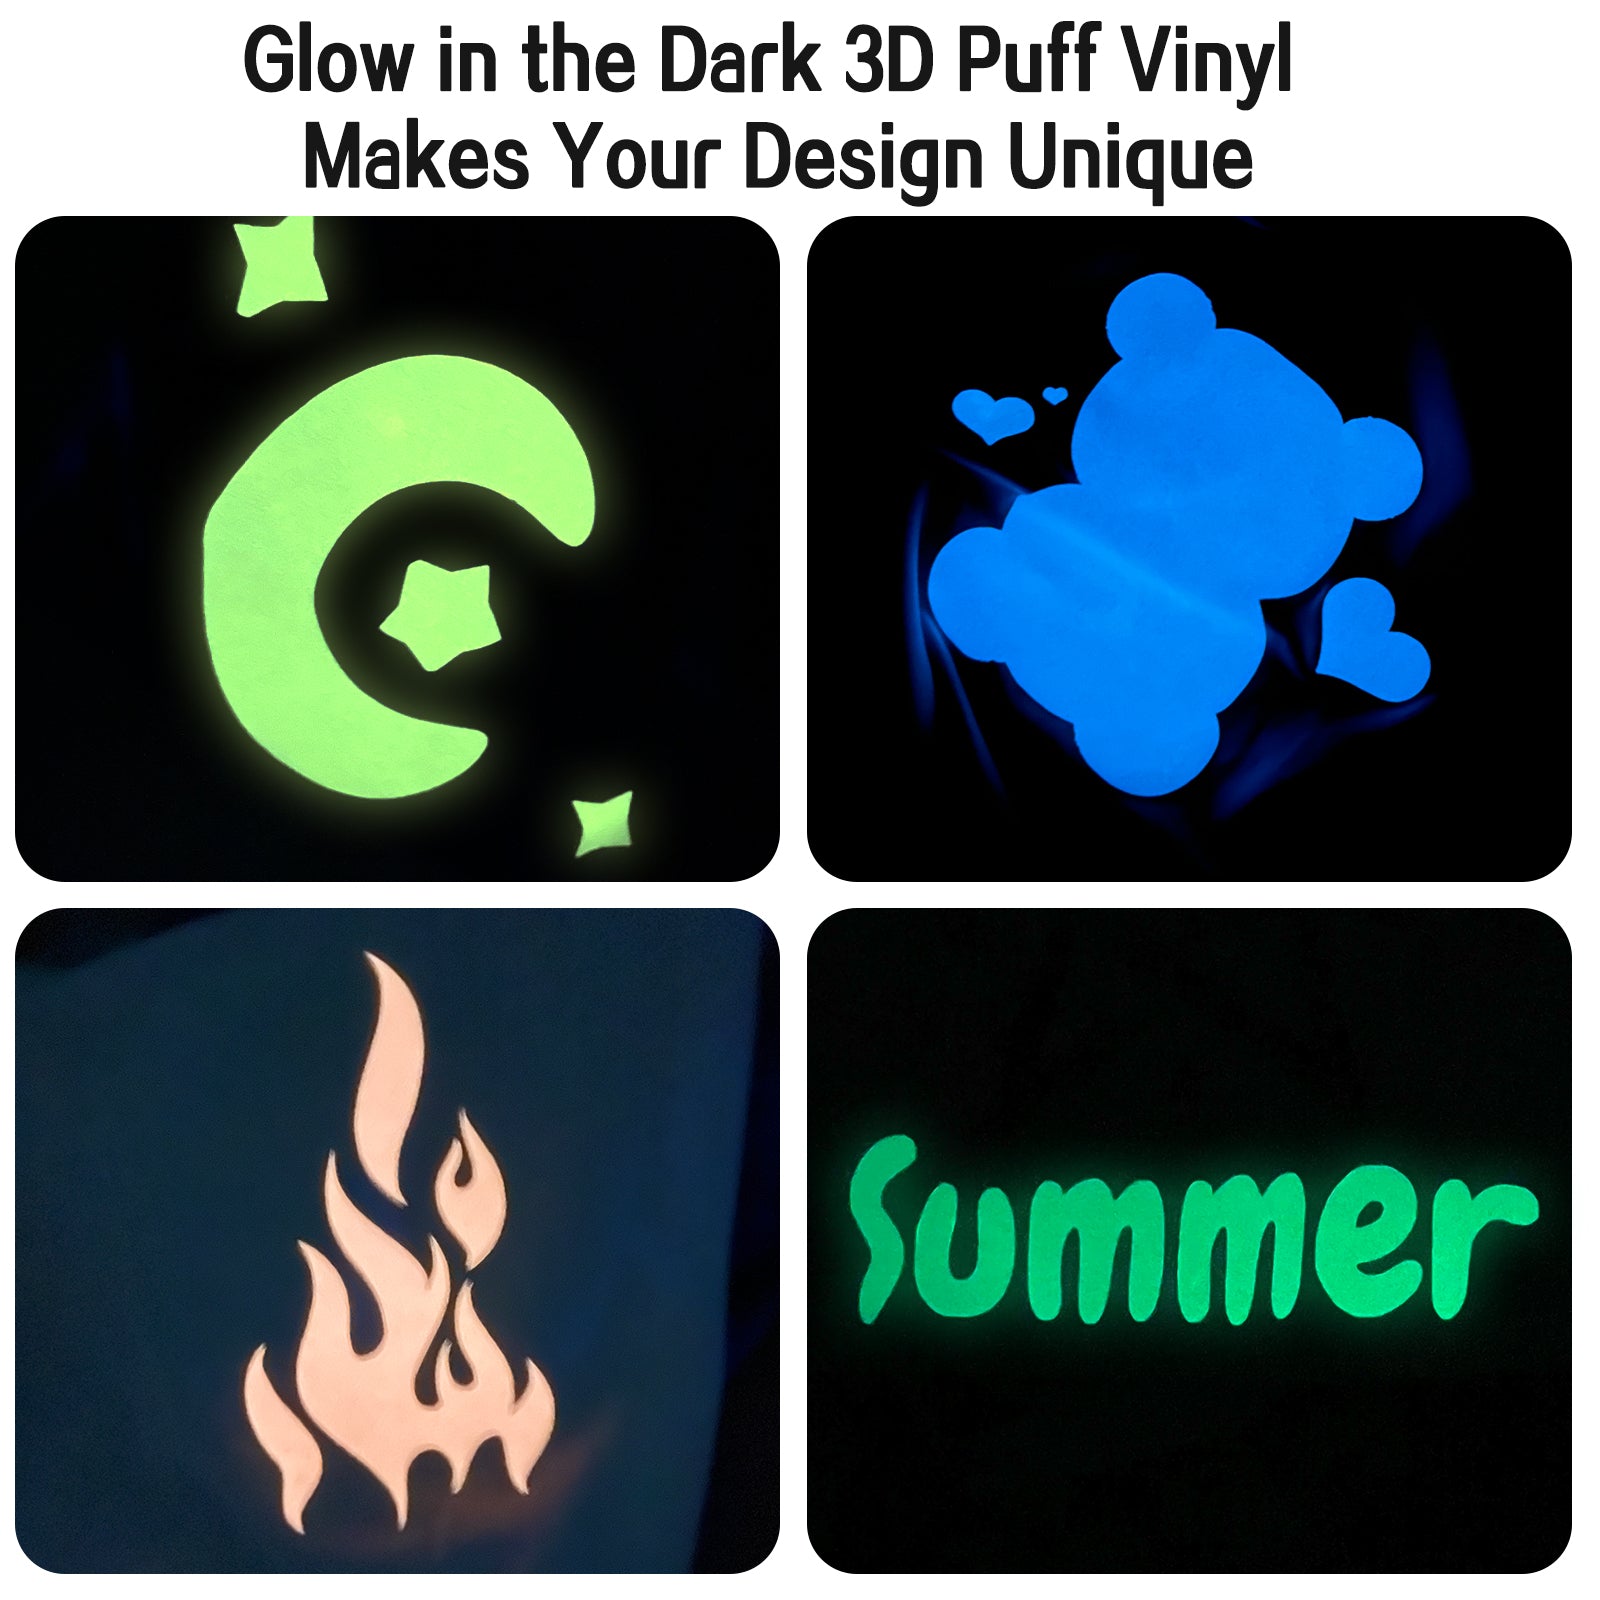 CenDale 3D Puff Vinyl HTV Glow in The Dark 12''x 10'' - 5 Colors